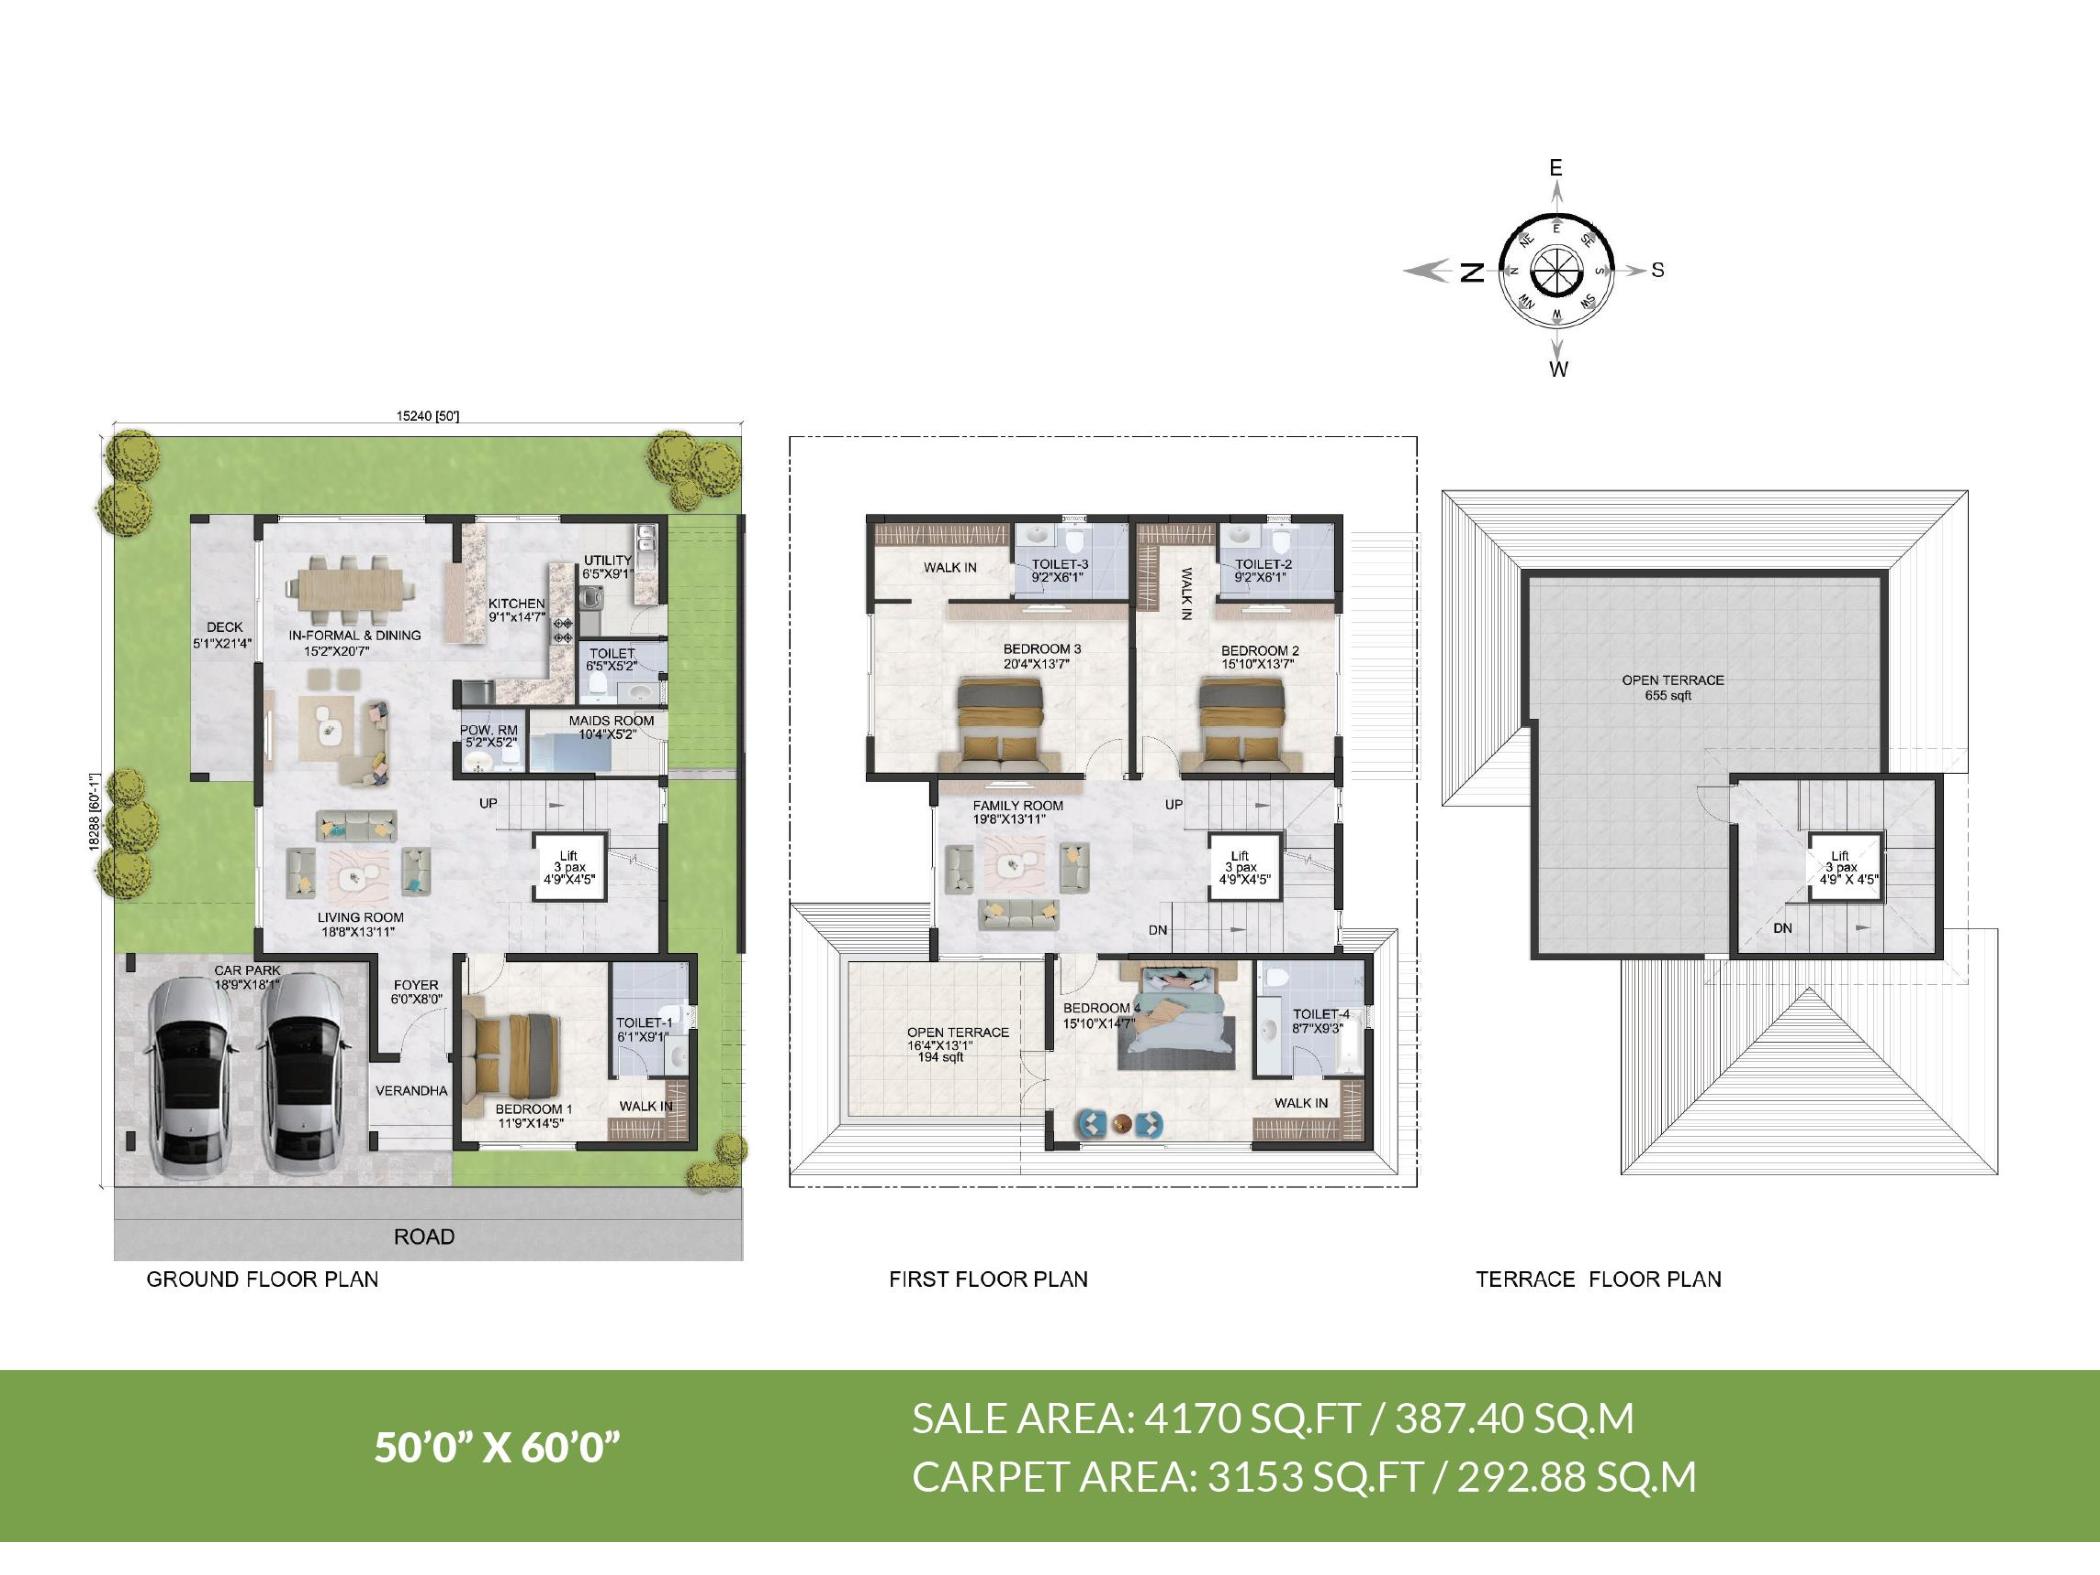 4 BHK 4170 Sq Ft Floor Plan of Prestige Park Grove